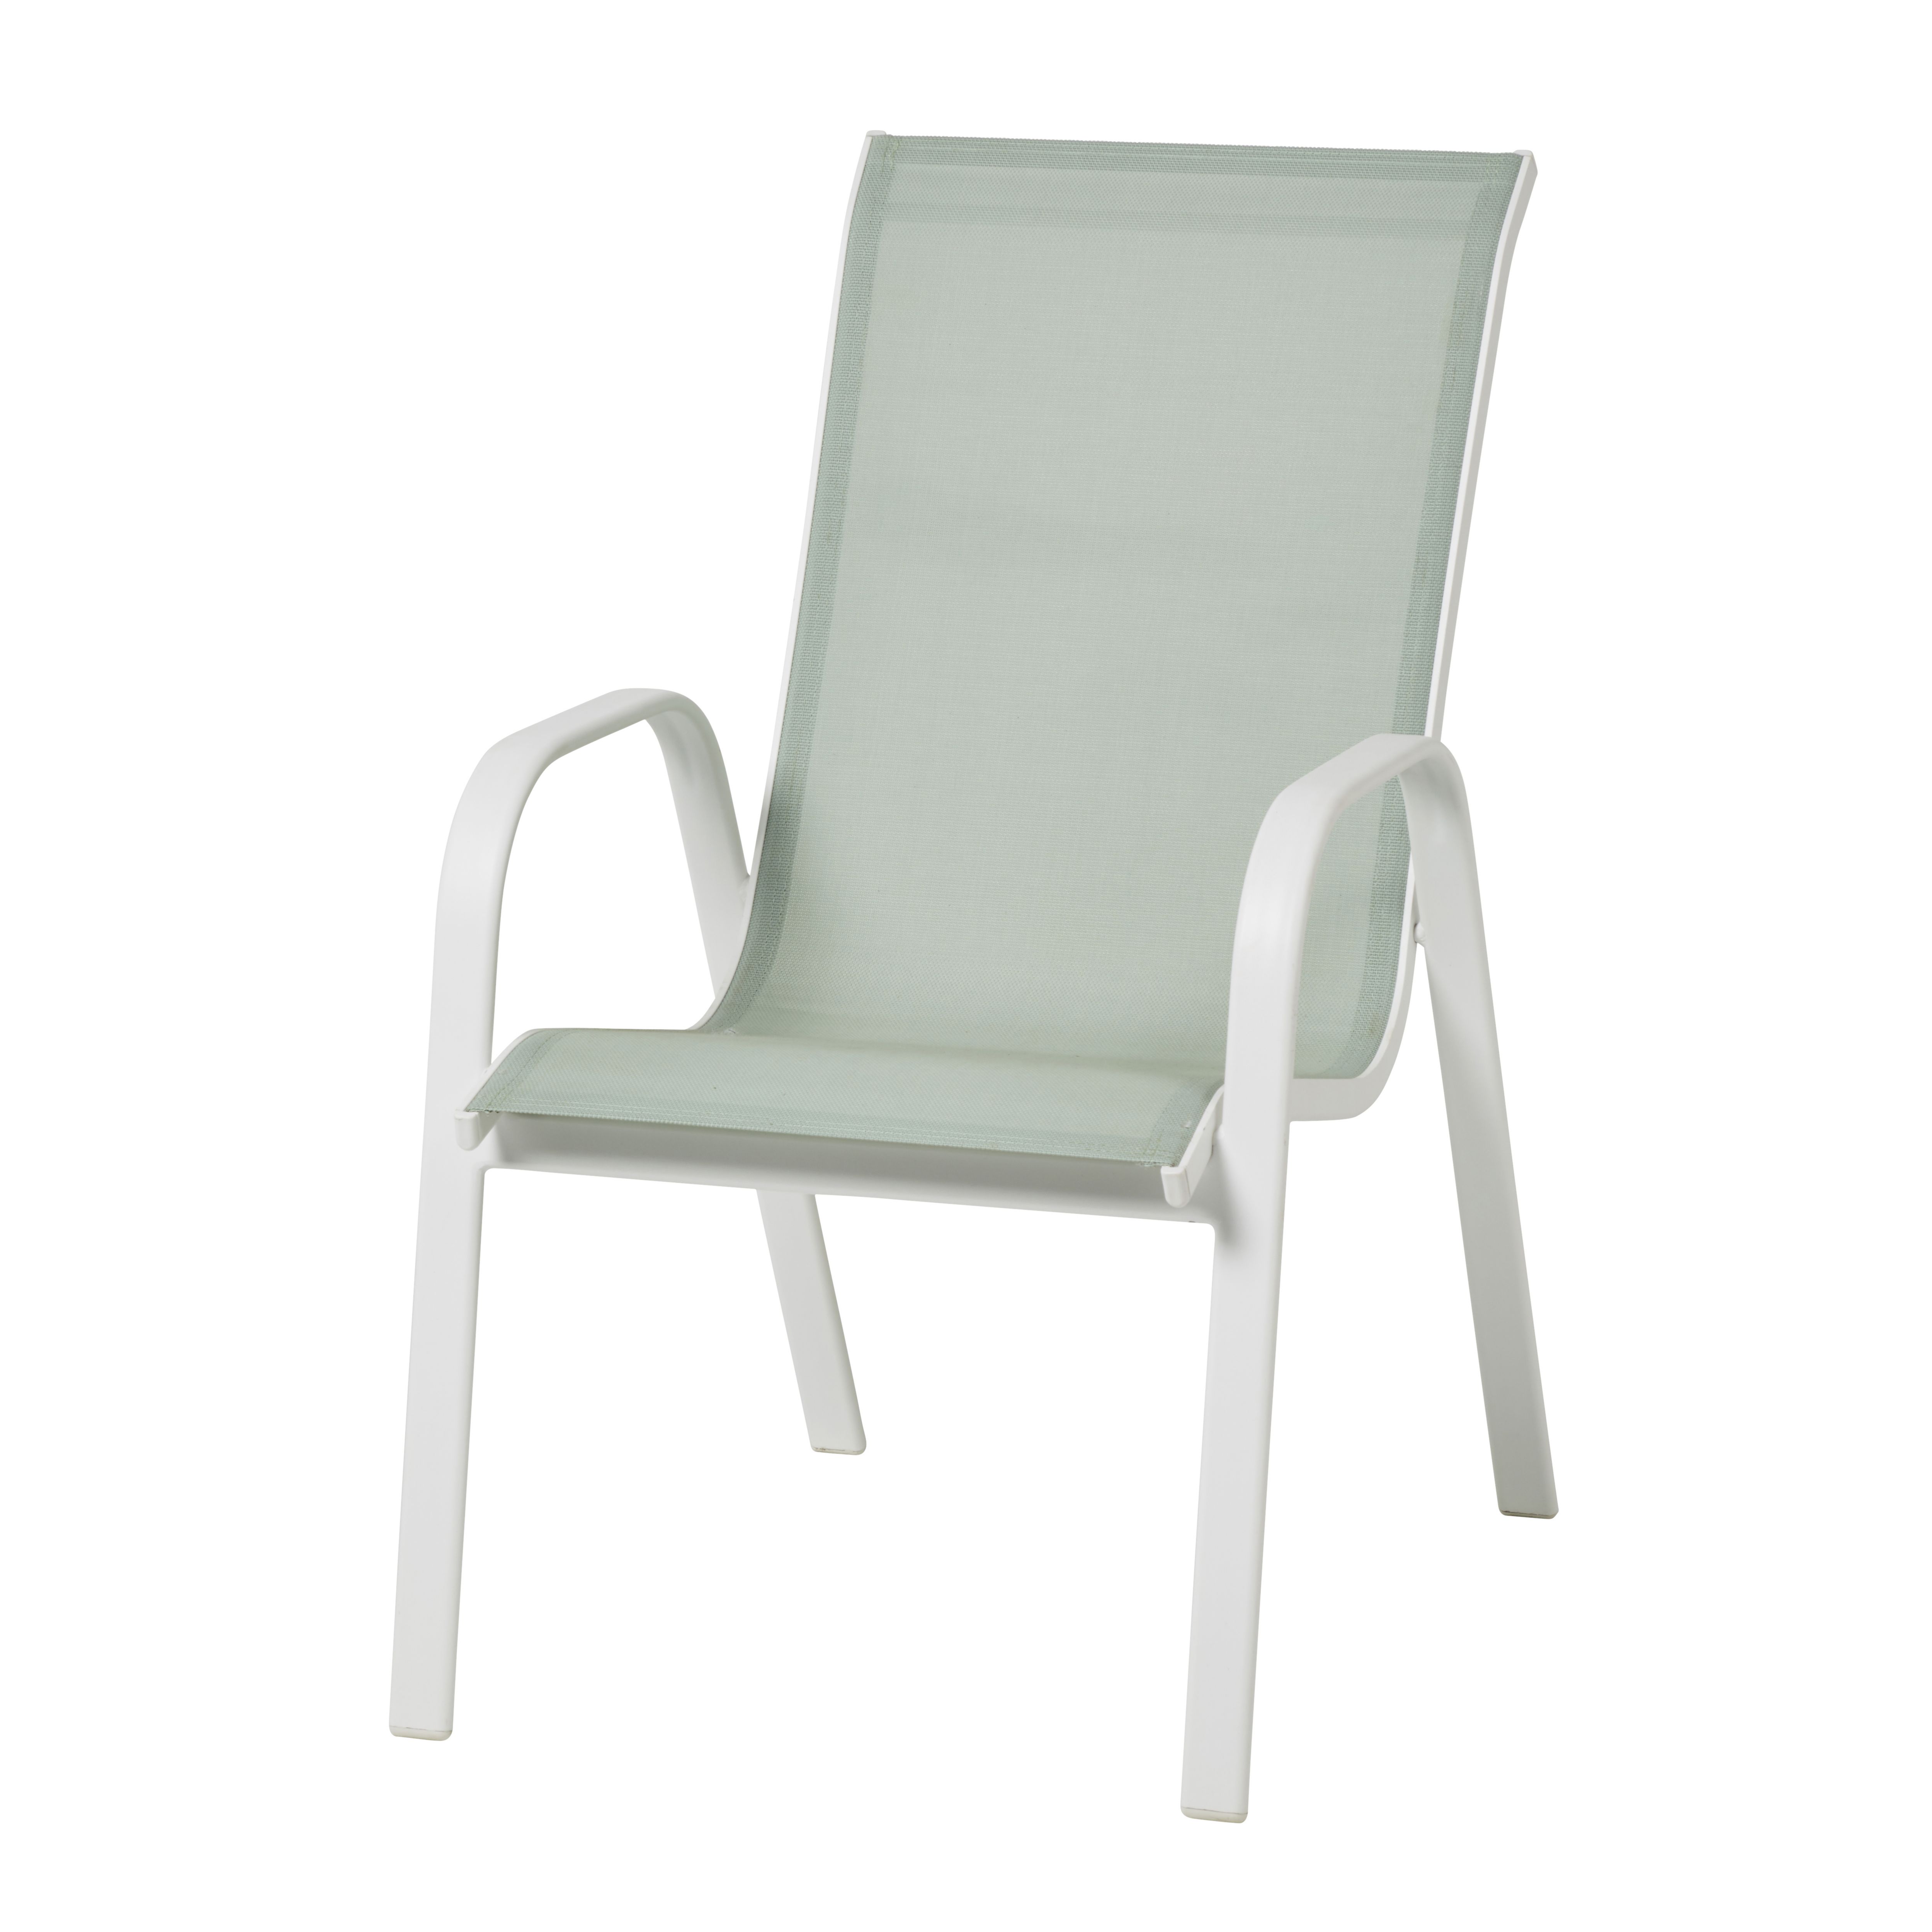 Green Plastic Garden Chairs B And Q : Green garden furniture diy fan